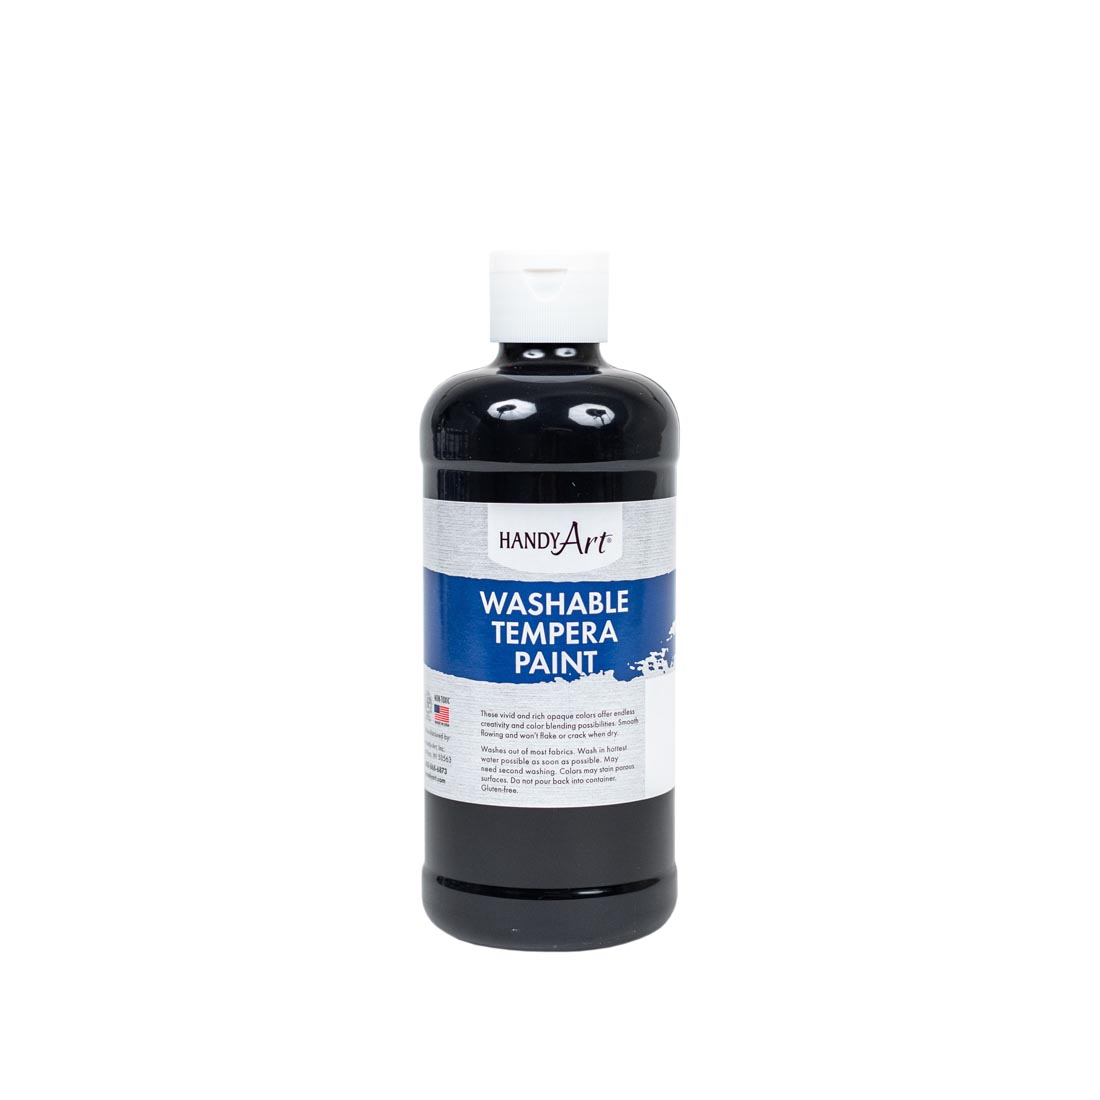 Pint bottle of Black Handy Art Washable Tempera Paint